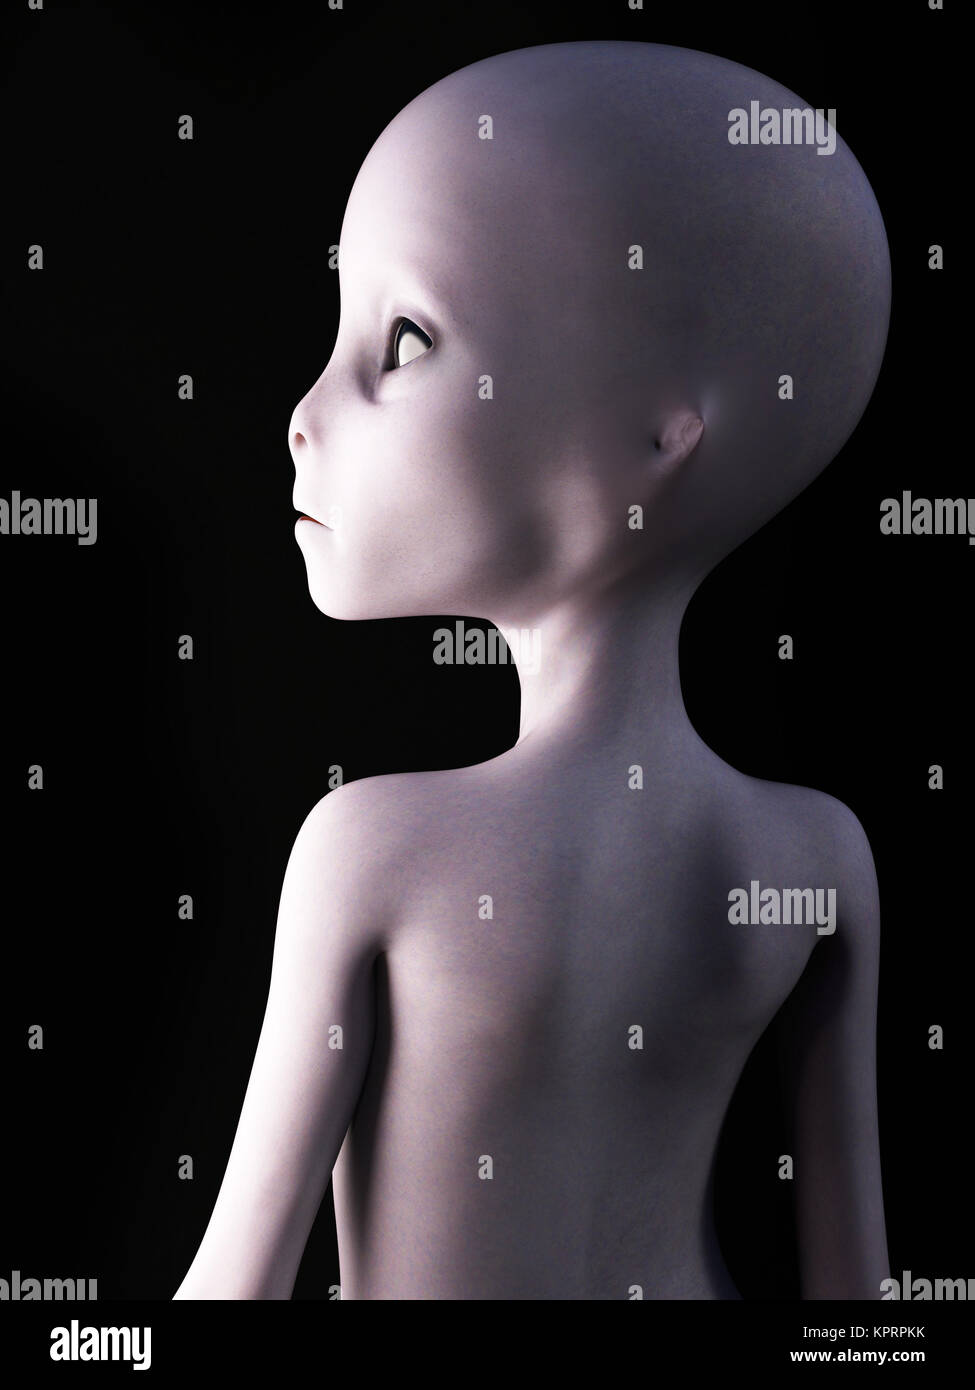 3D rendering of an alien. Stock Photo